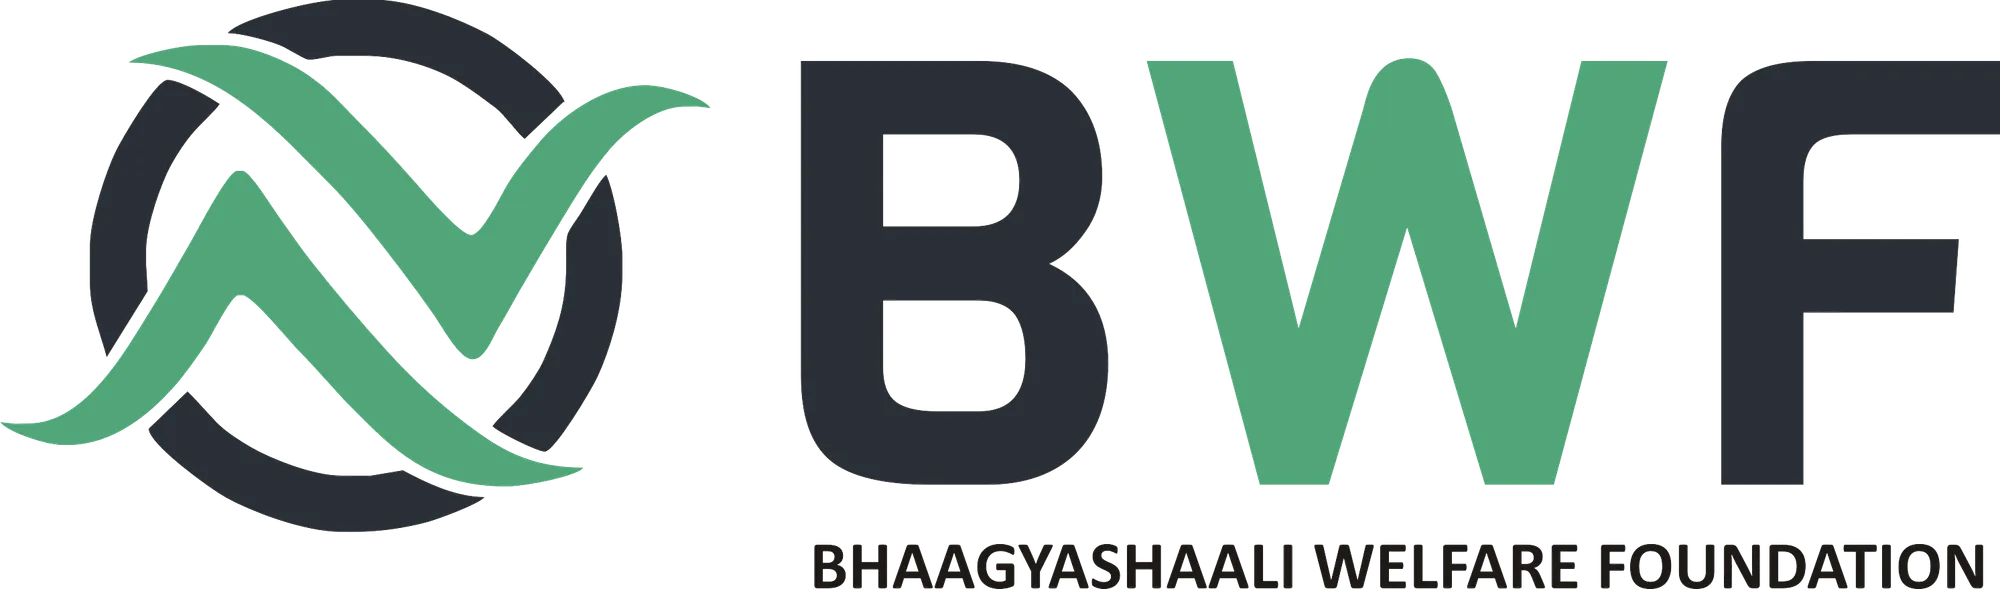 Bhagyashaali Welfare Foundation